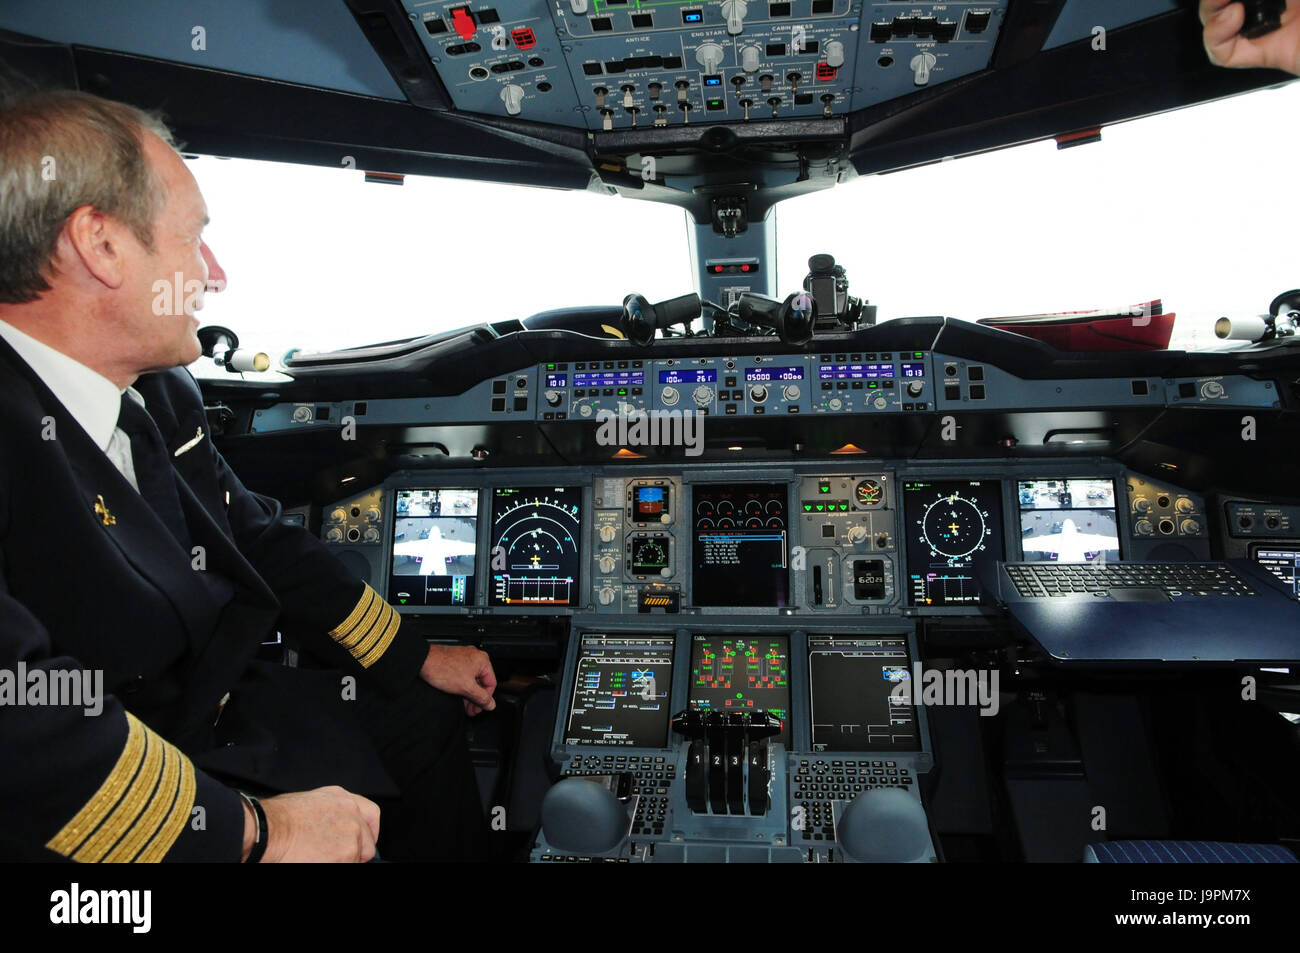 Flugzeug, Cockpit, Pilot, Passagierflugzeug, innen, Lufthansa, Armaturen,  Leute, Mann, Uniform, Beruf Stockfotografie - Alamy